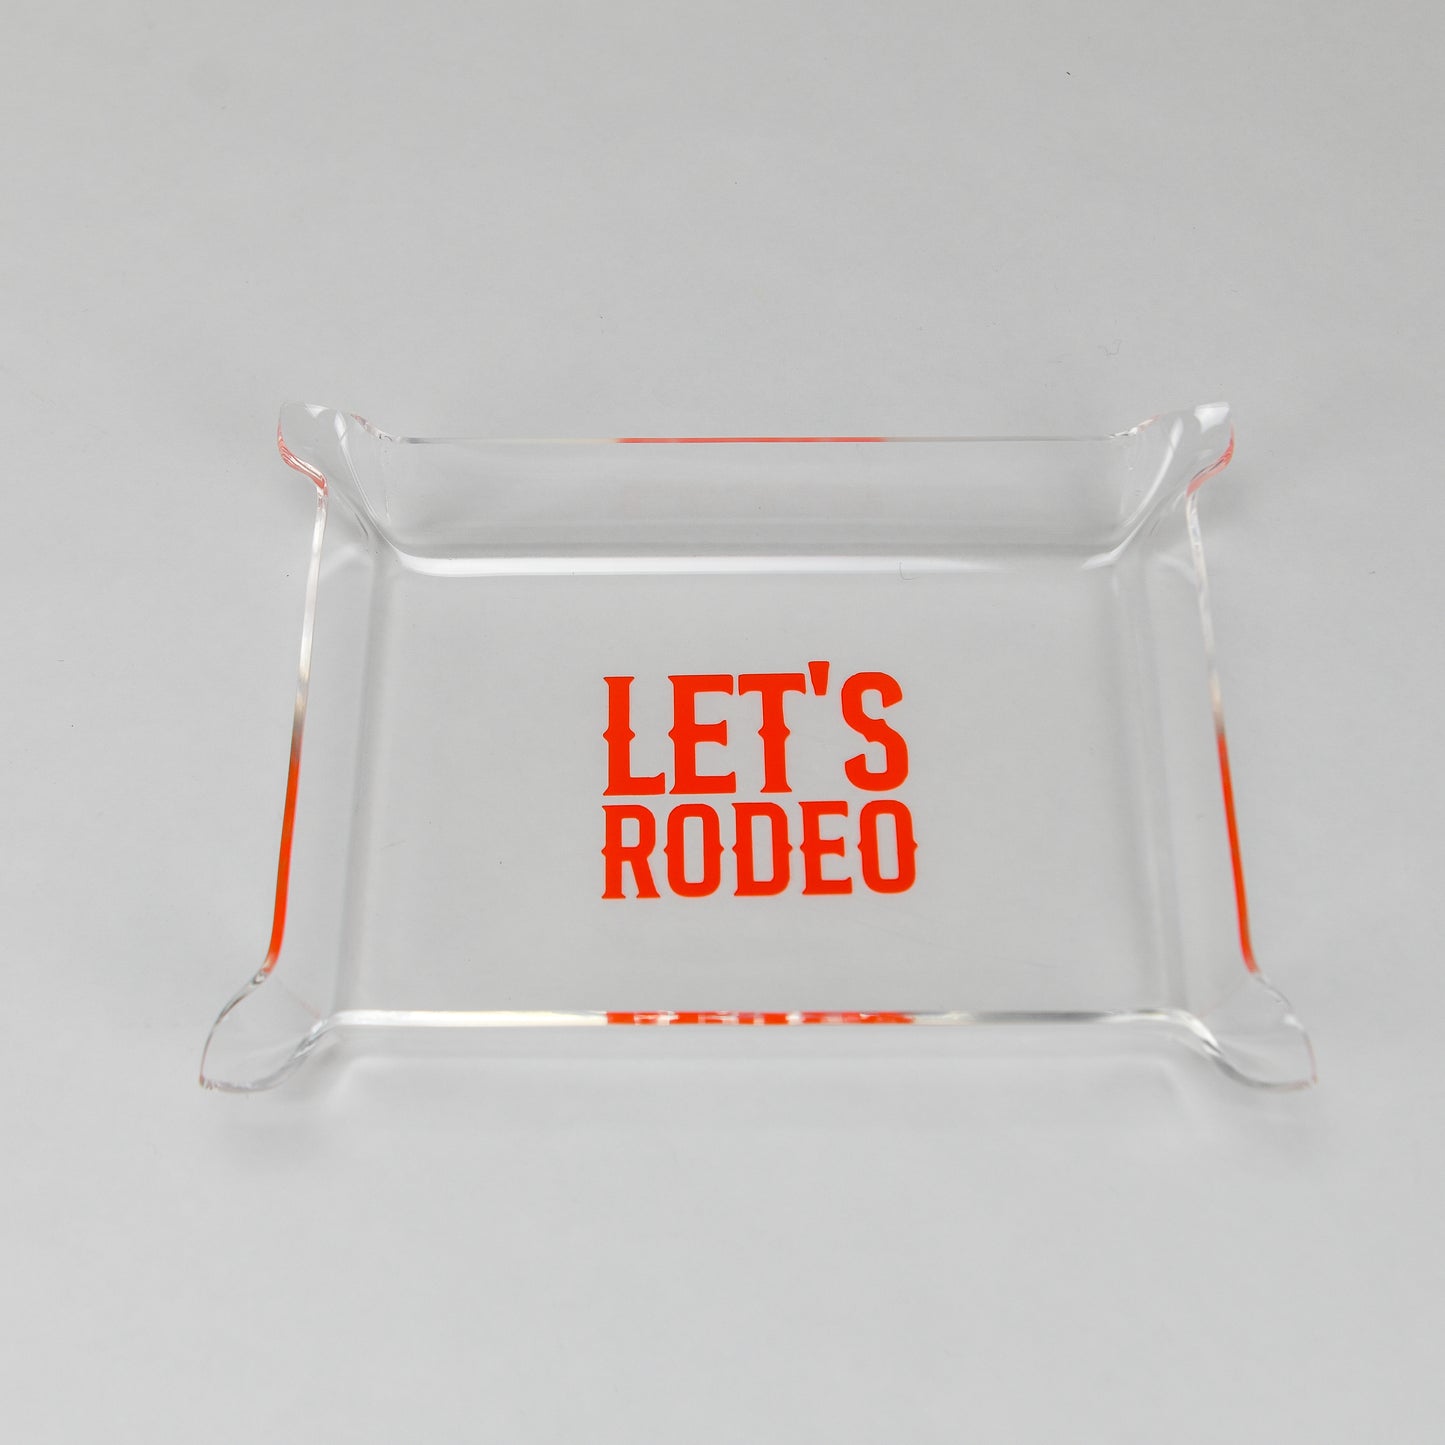 Lets Rodeo Acrylic Tray - Orange